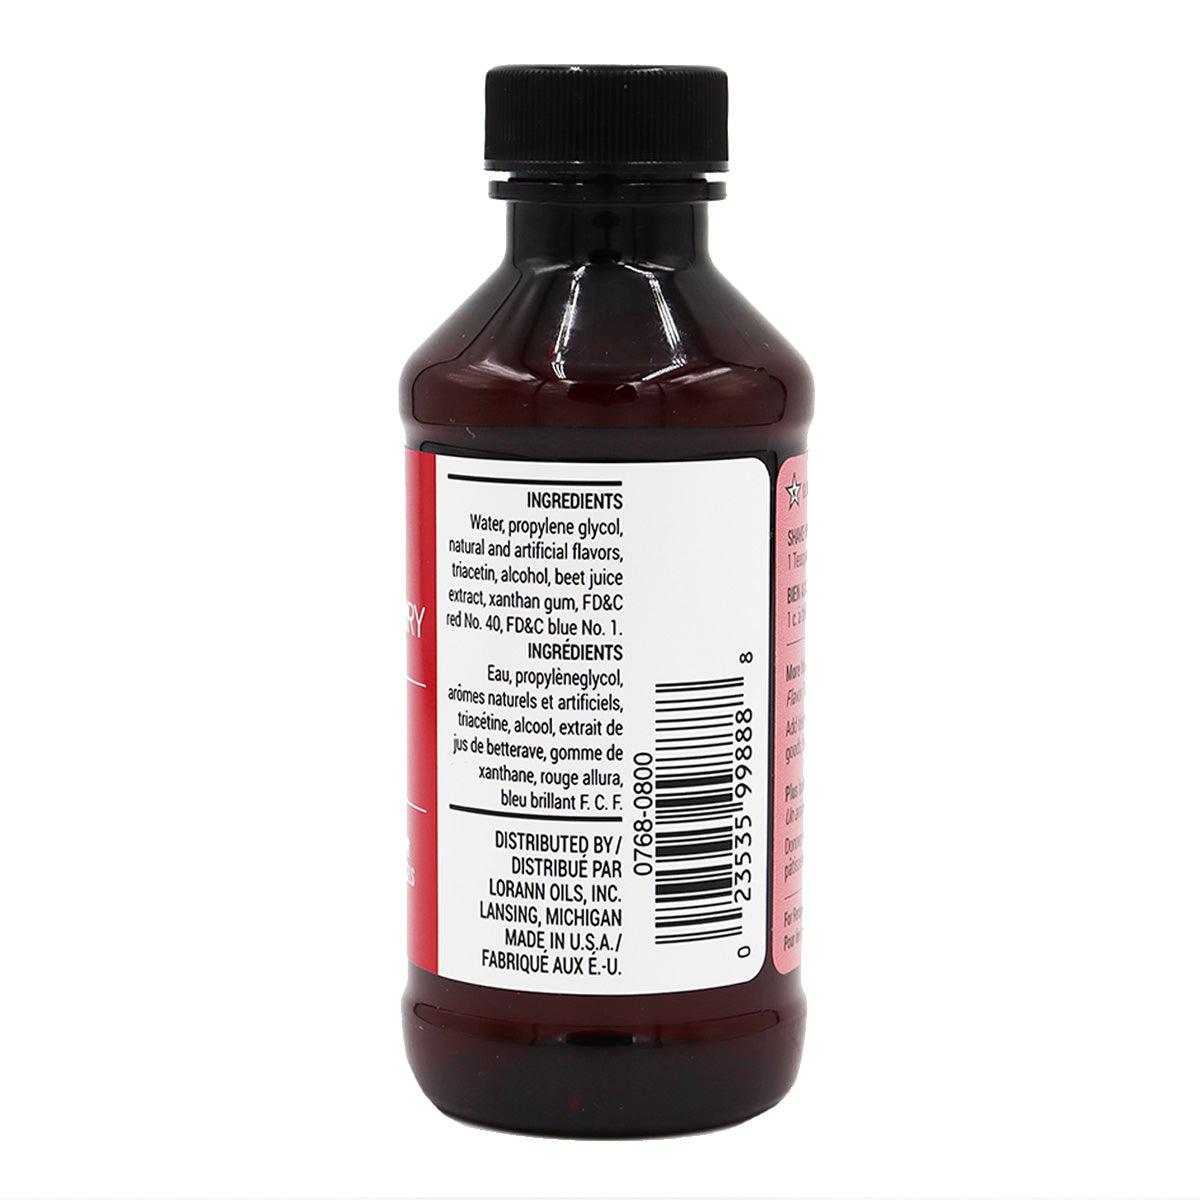 Strawberry Emulsion 4 fl oz (118ml) - ViaCheff.com